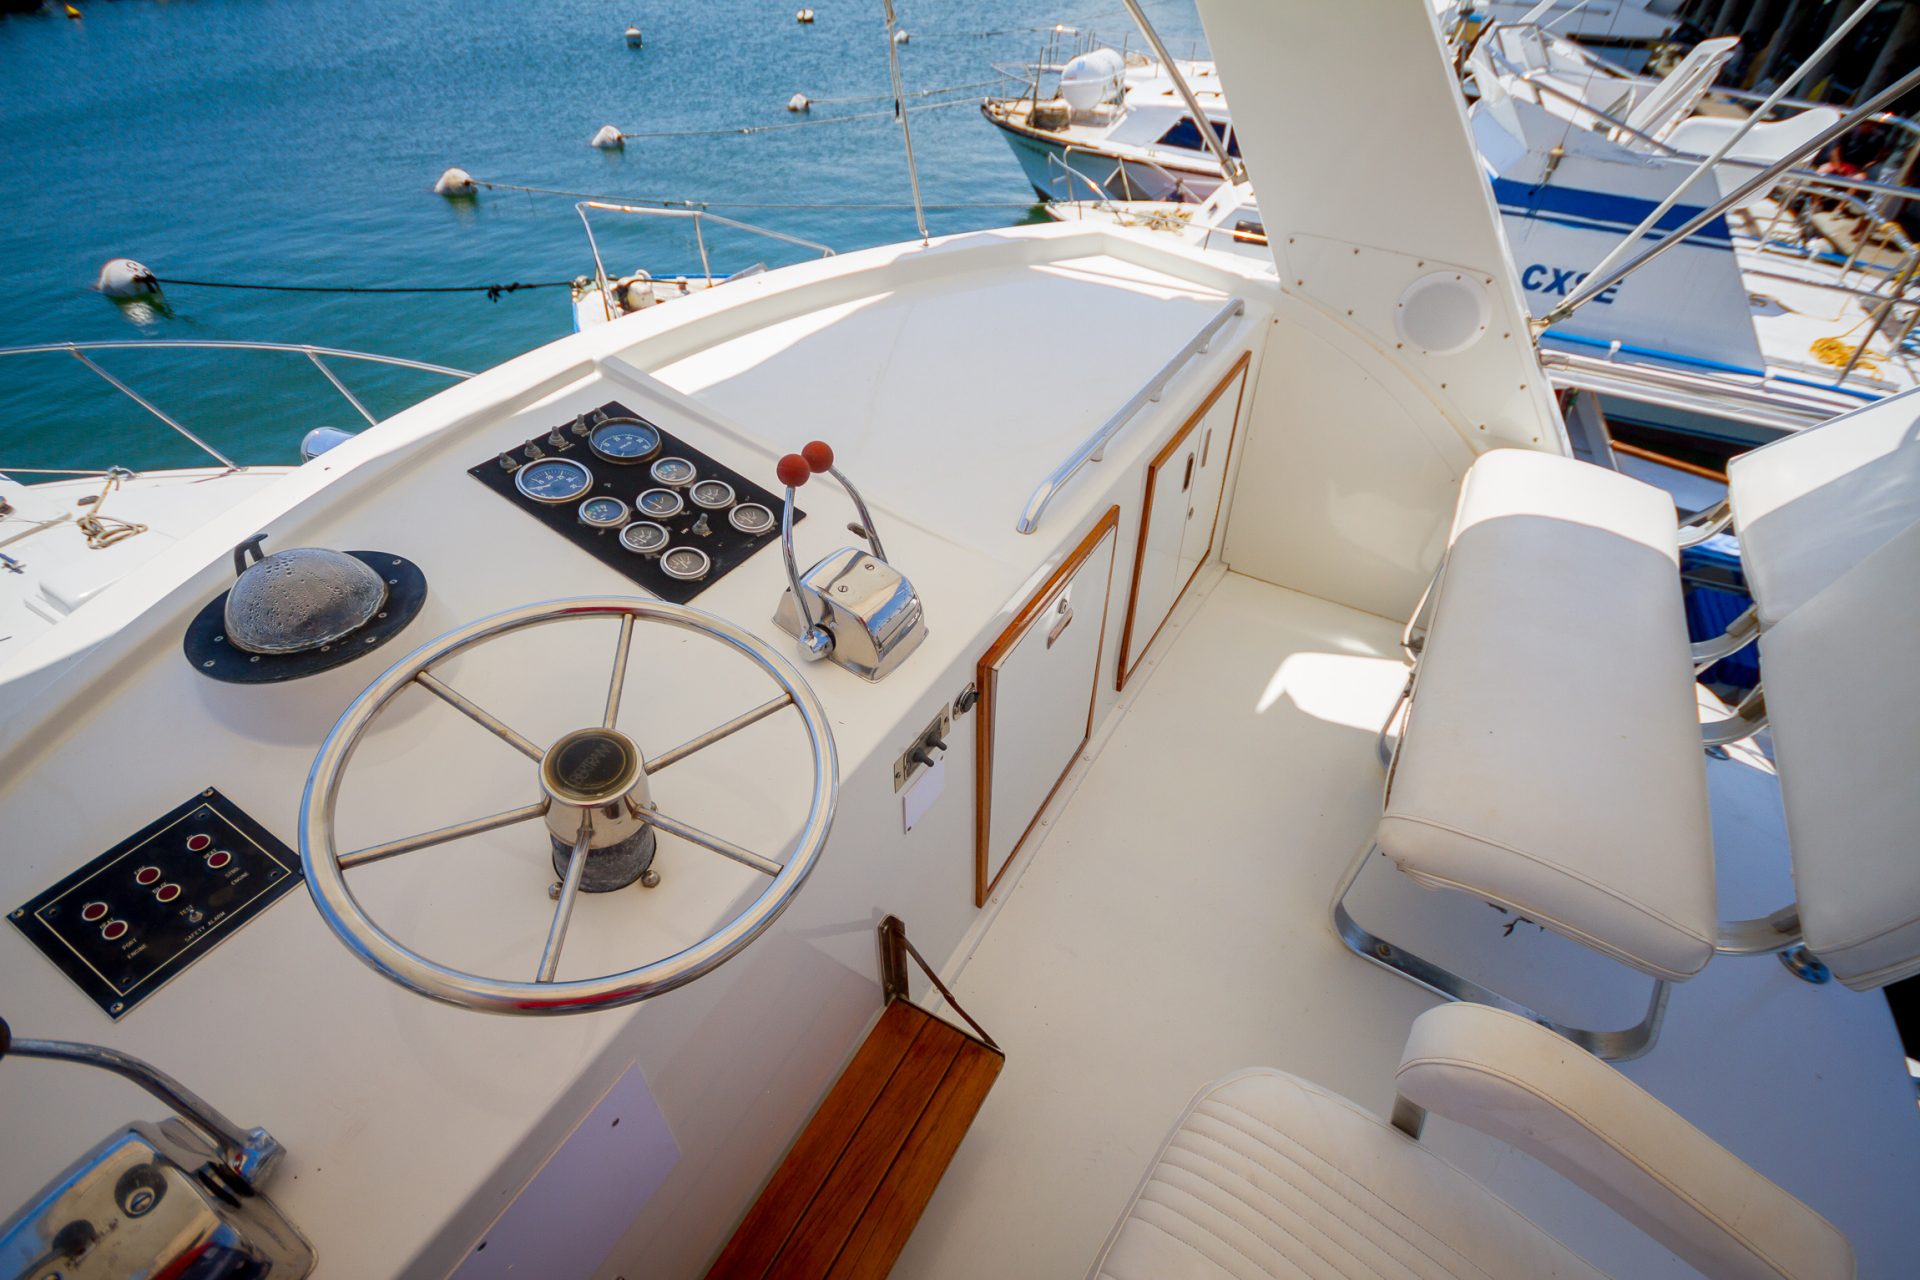 Alquiler barco yate Punta del Este Rent classic yacht